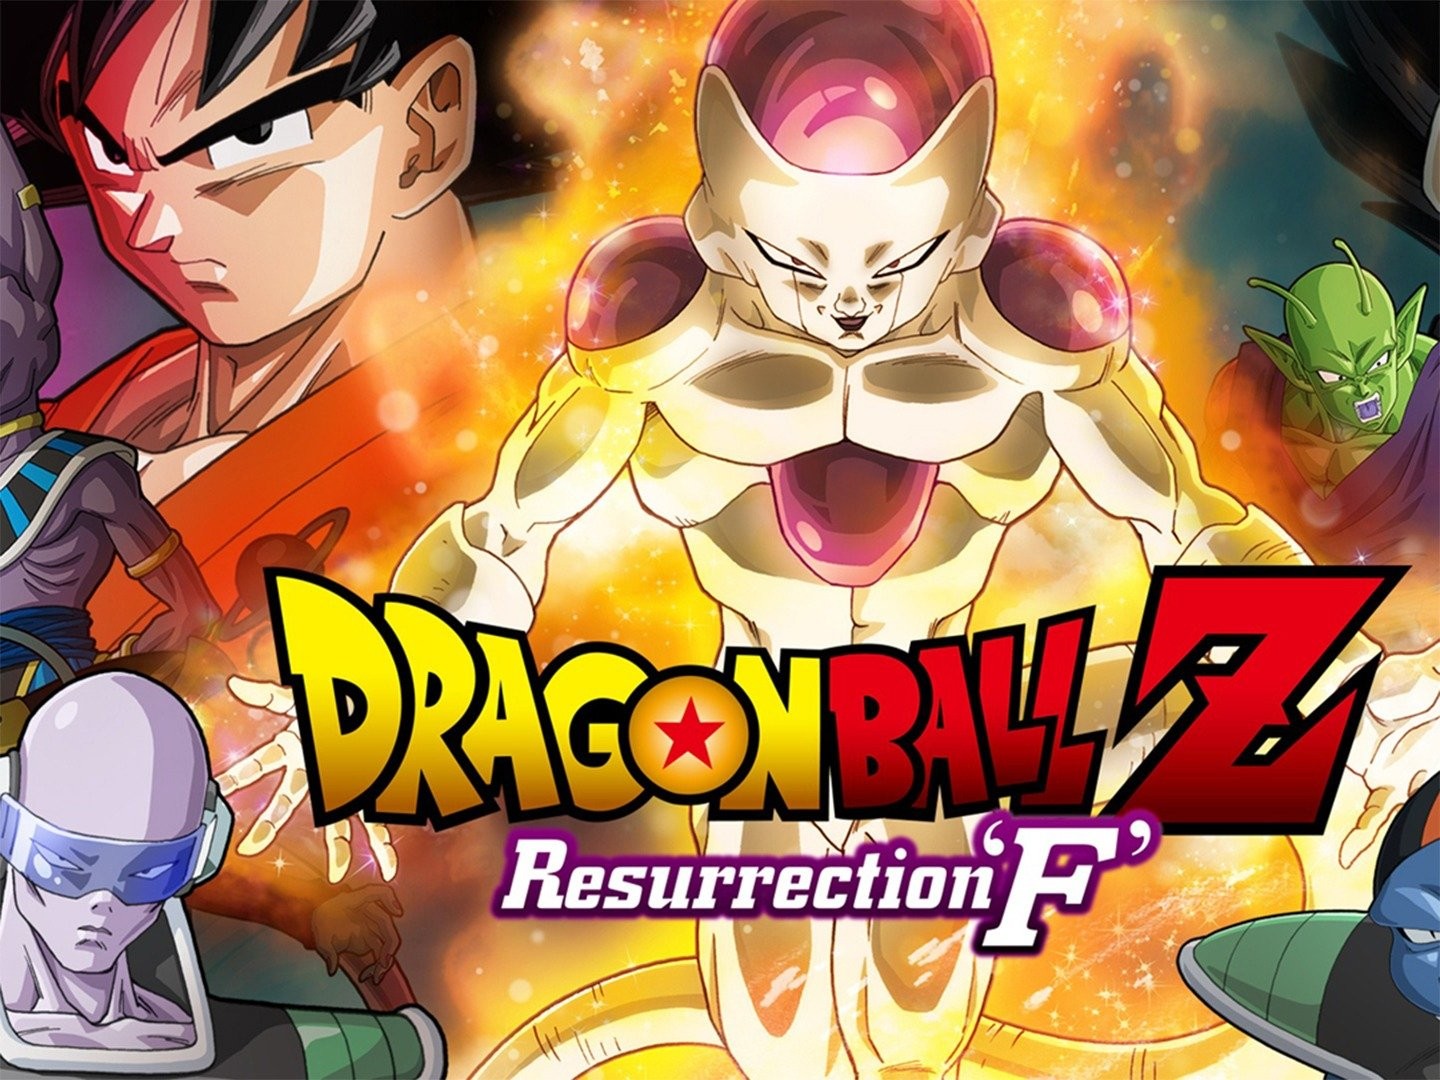 Dragon Ball Z: Resurrection 'F' Movie Review: An Entertaining